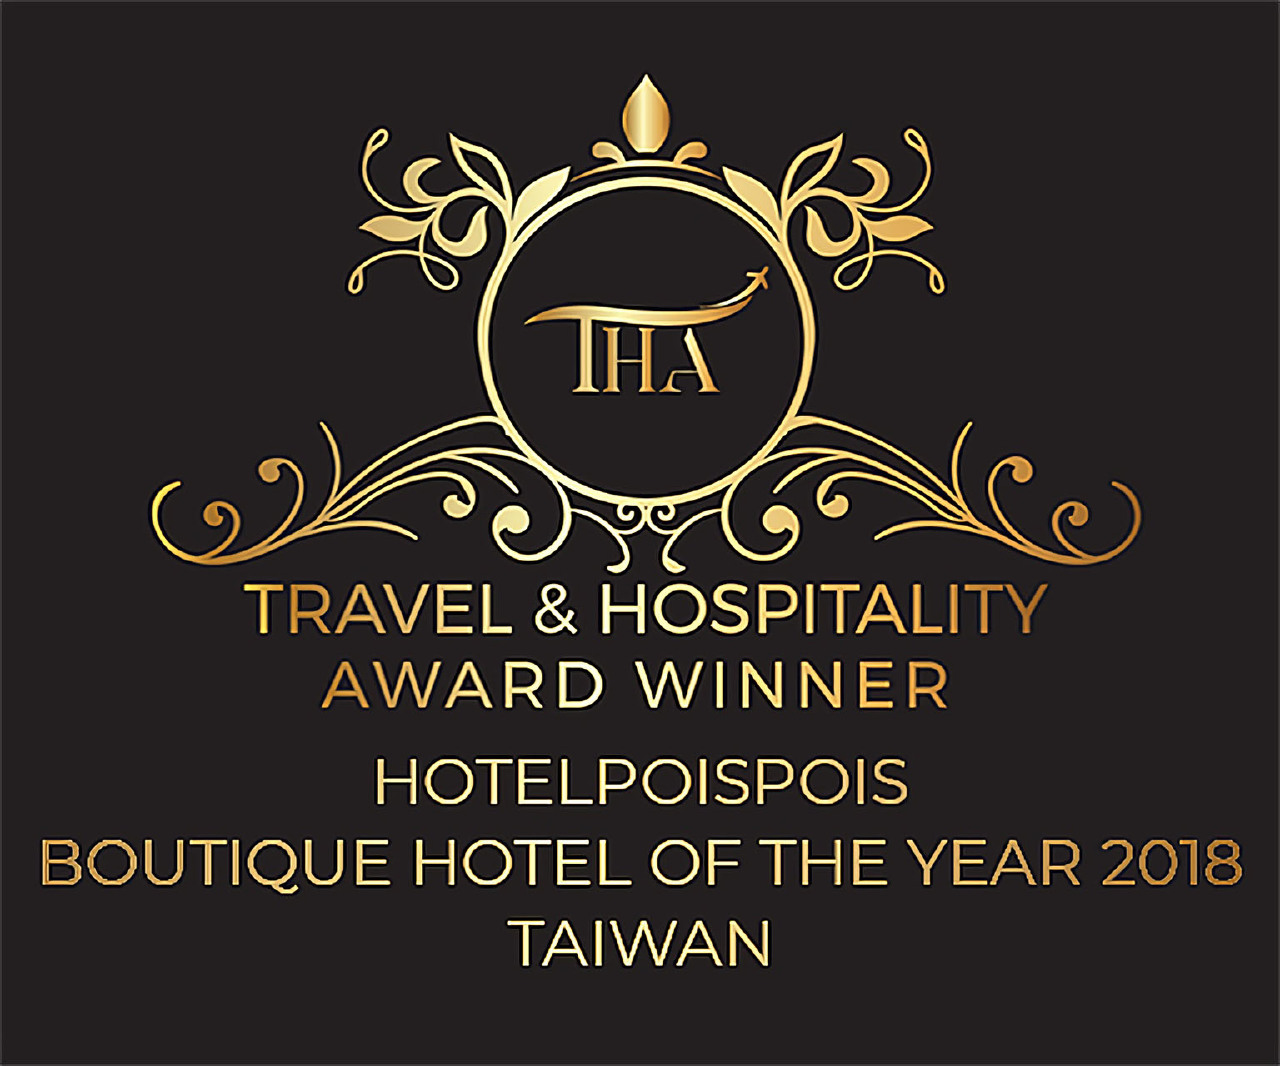 hotelpoispois 榮獲 Hospitality & Travel Award 2018年台灣區精品旅店獎項